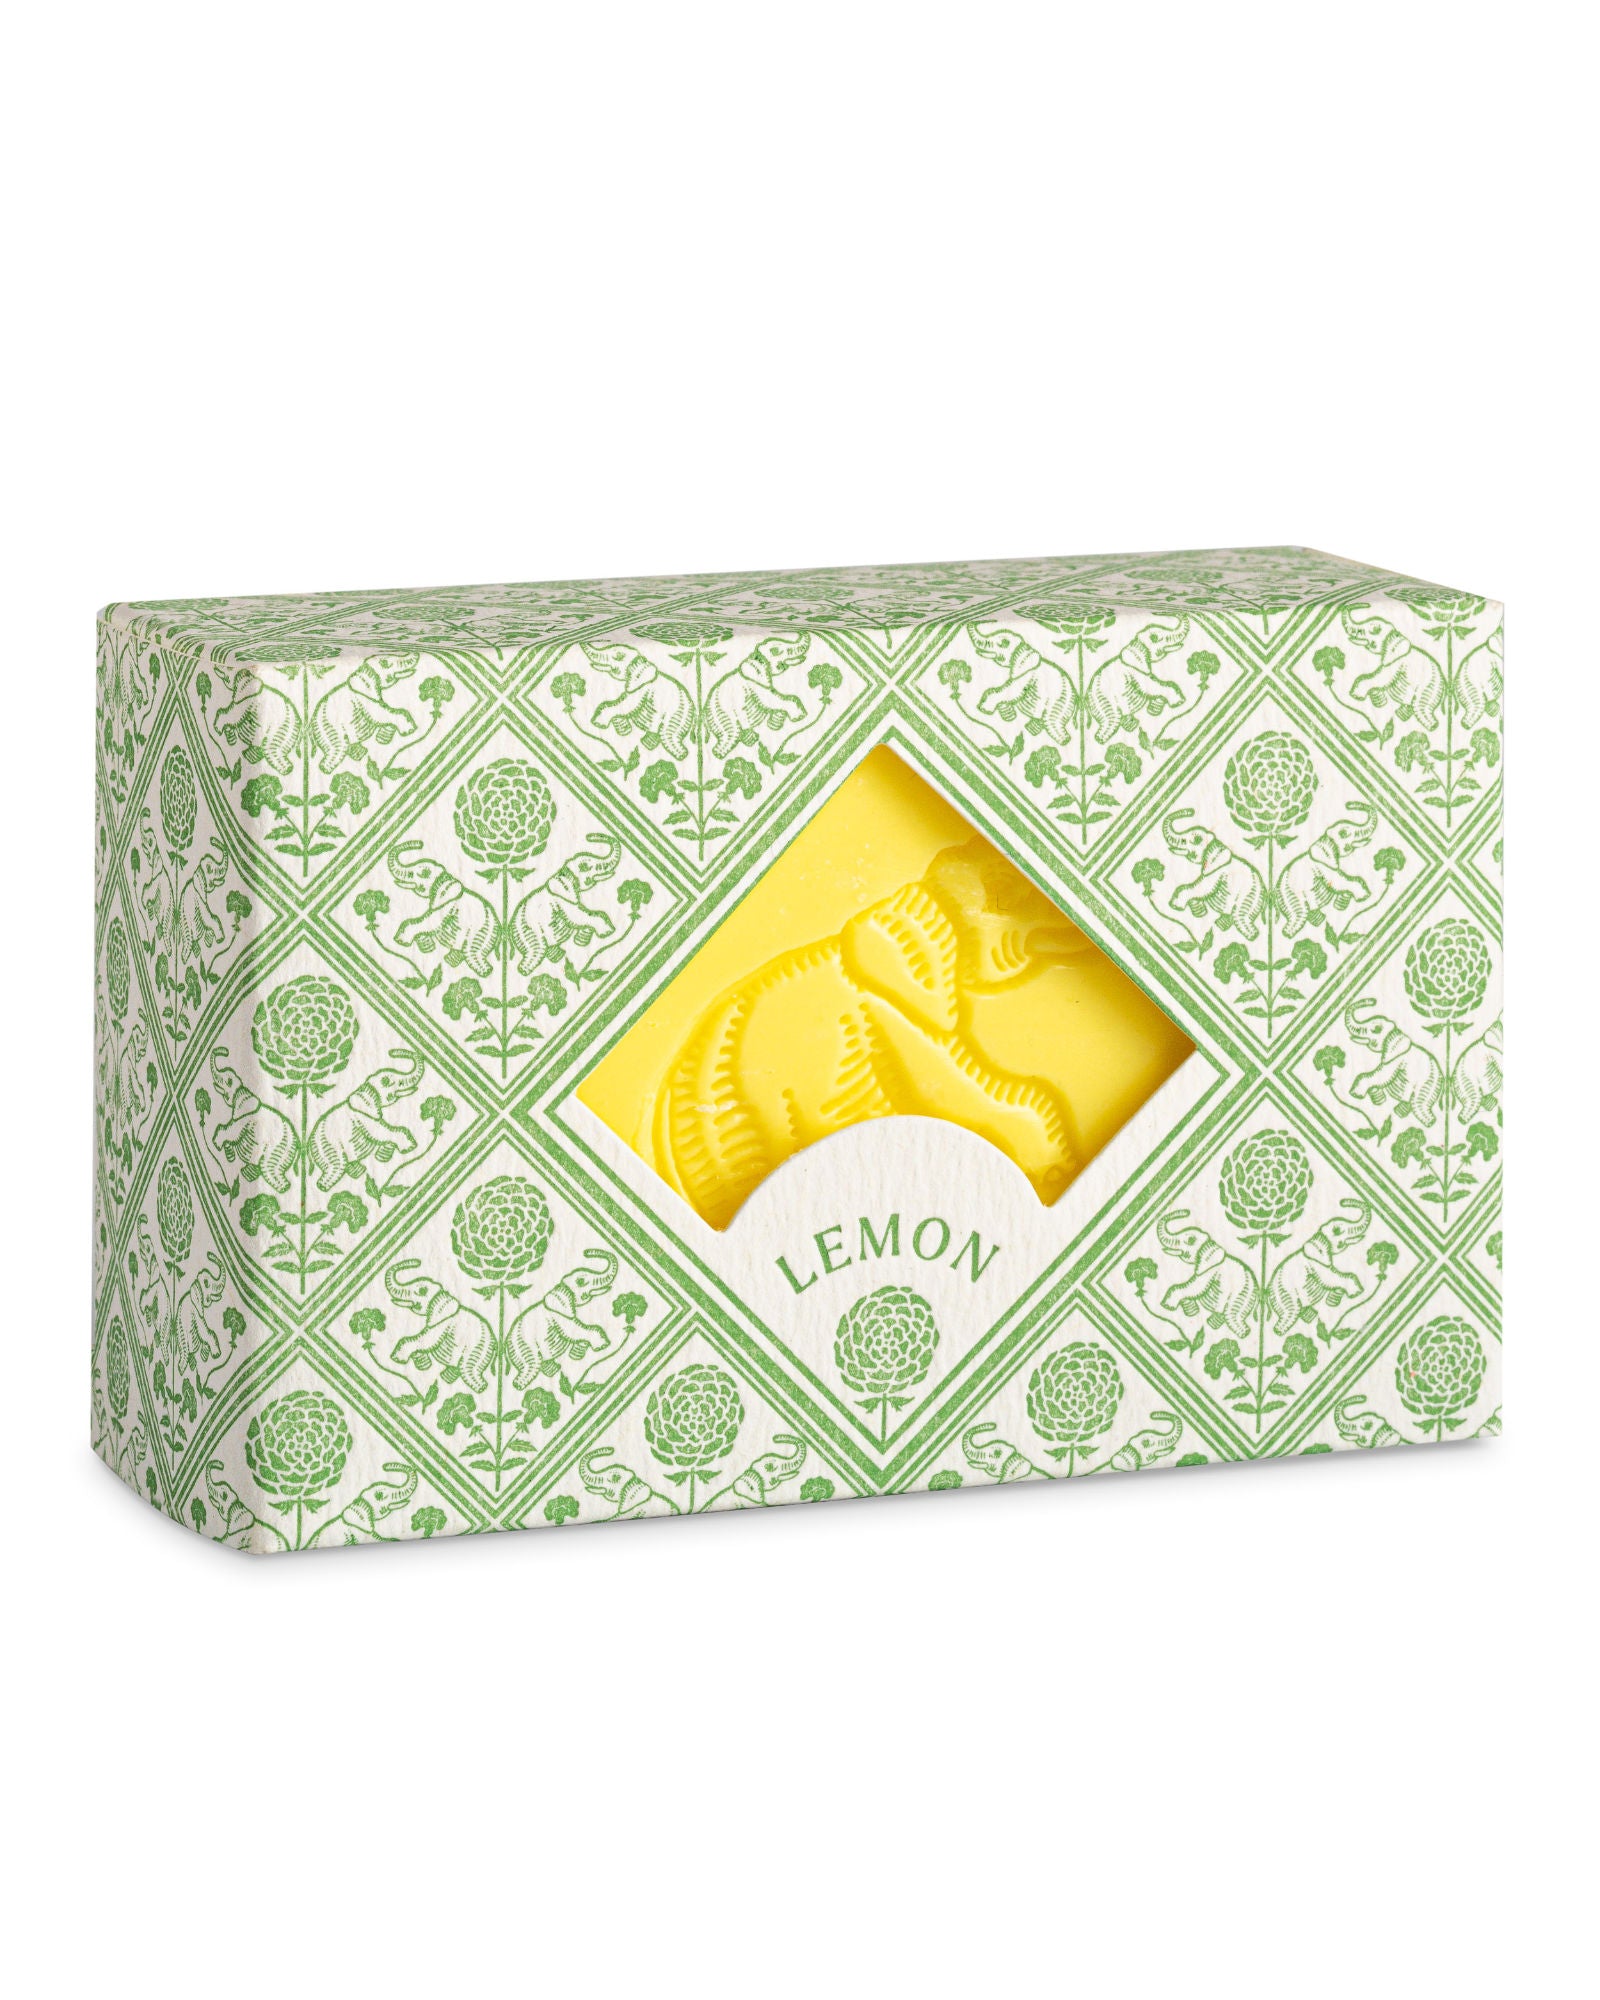 L'elephant Hand Soap - Lemon